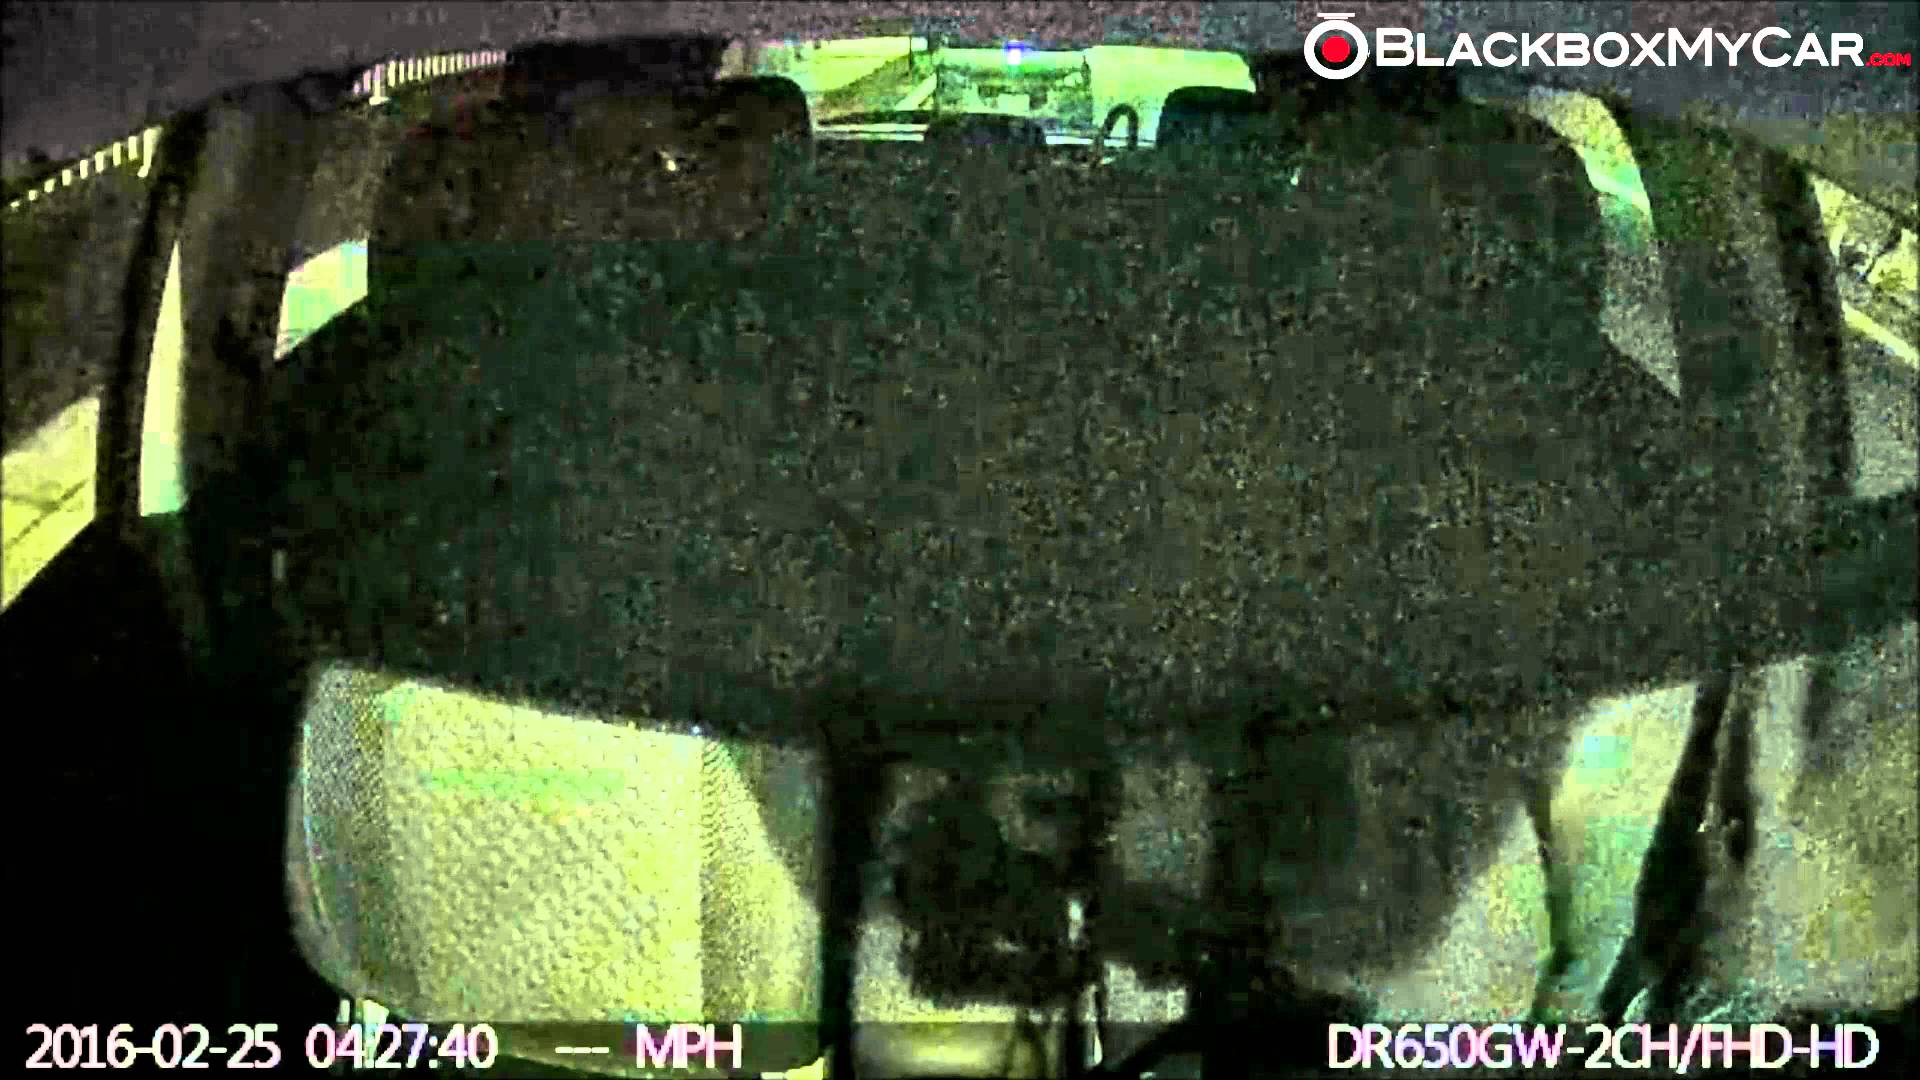 Vehicle Break-in Caught on BlackVue Dashcams